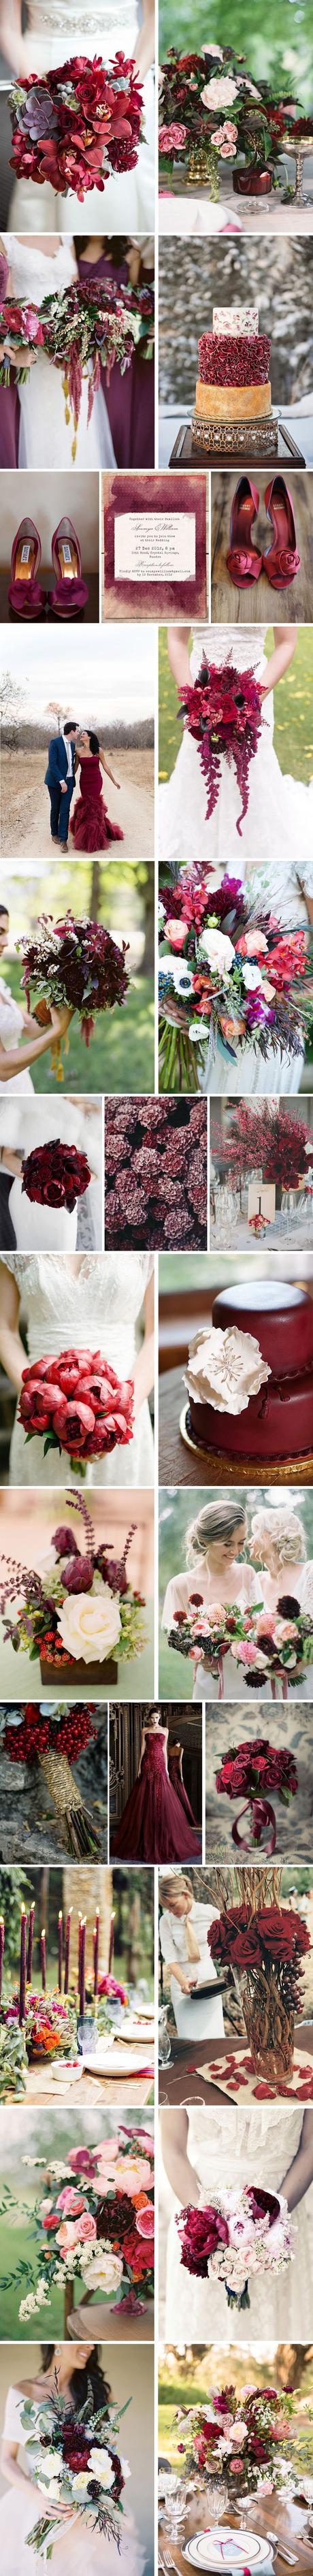 Pantone color of 2015 Marsala wedding inspiration